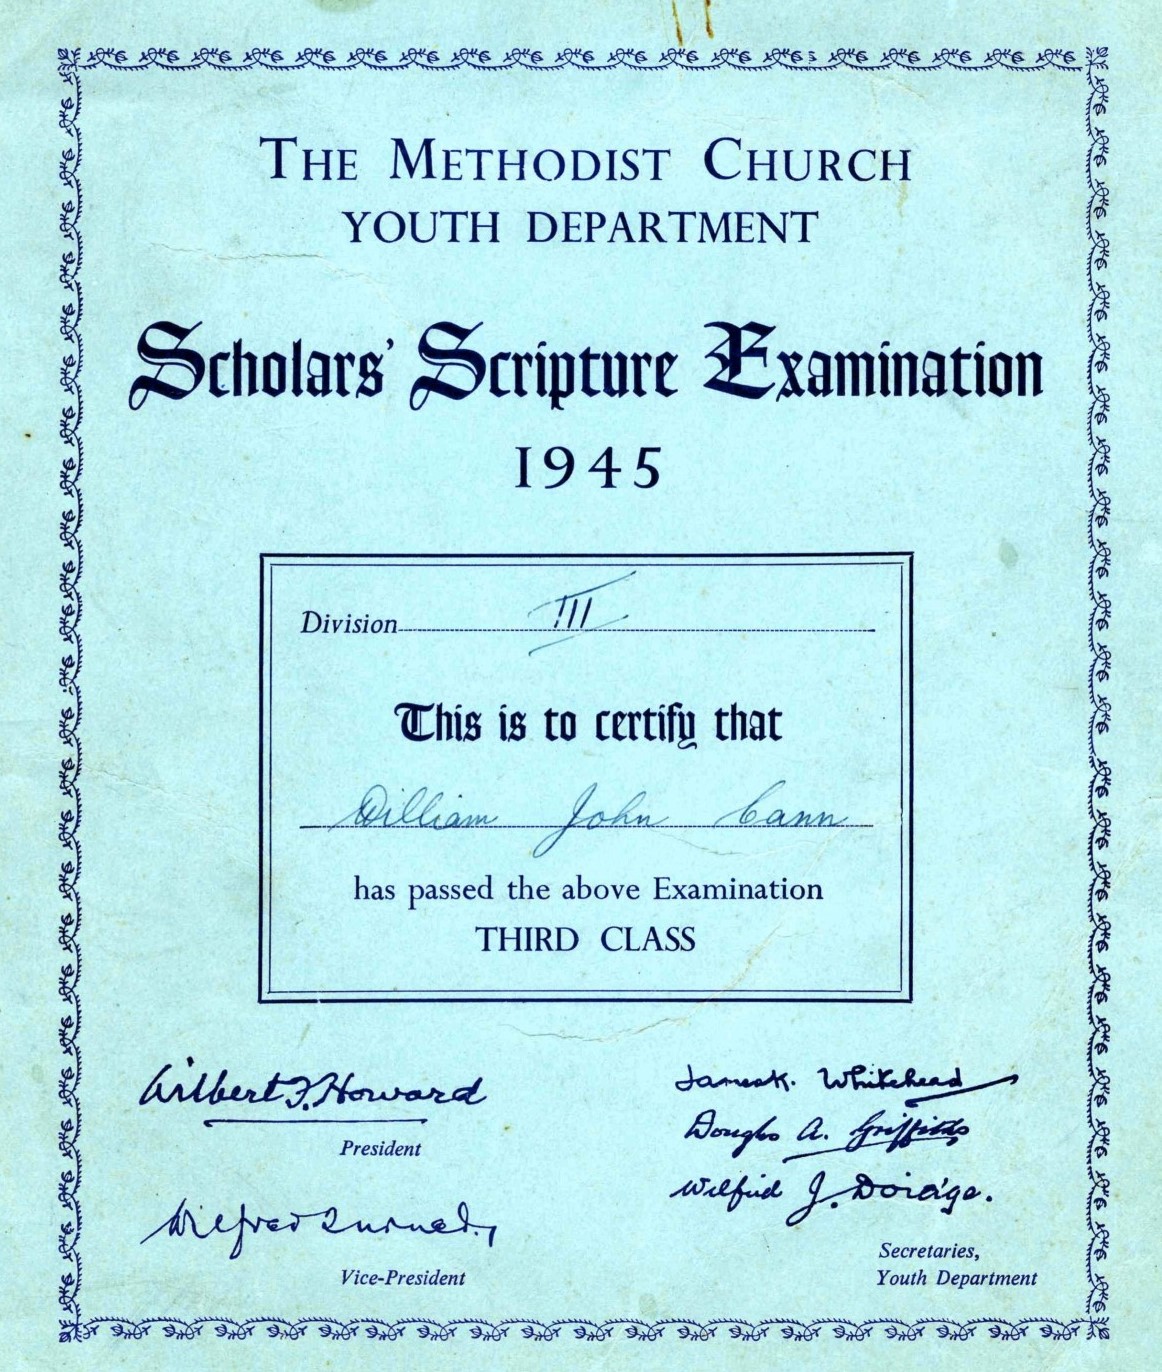 Scholar's Scripture Examination Certificate 1945